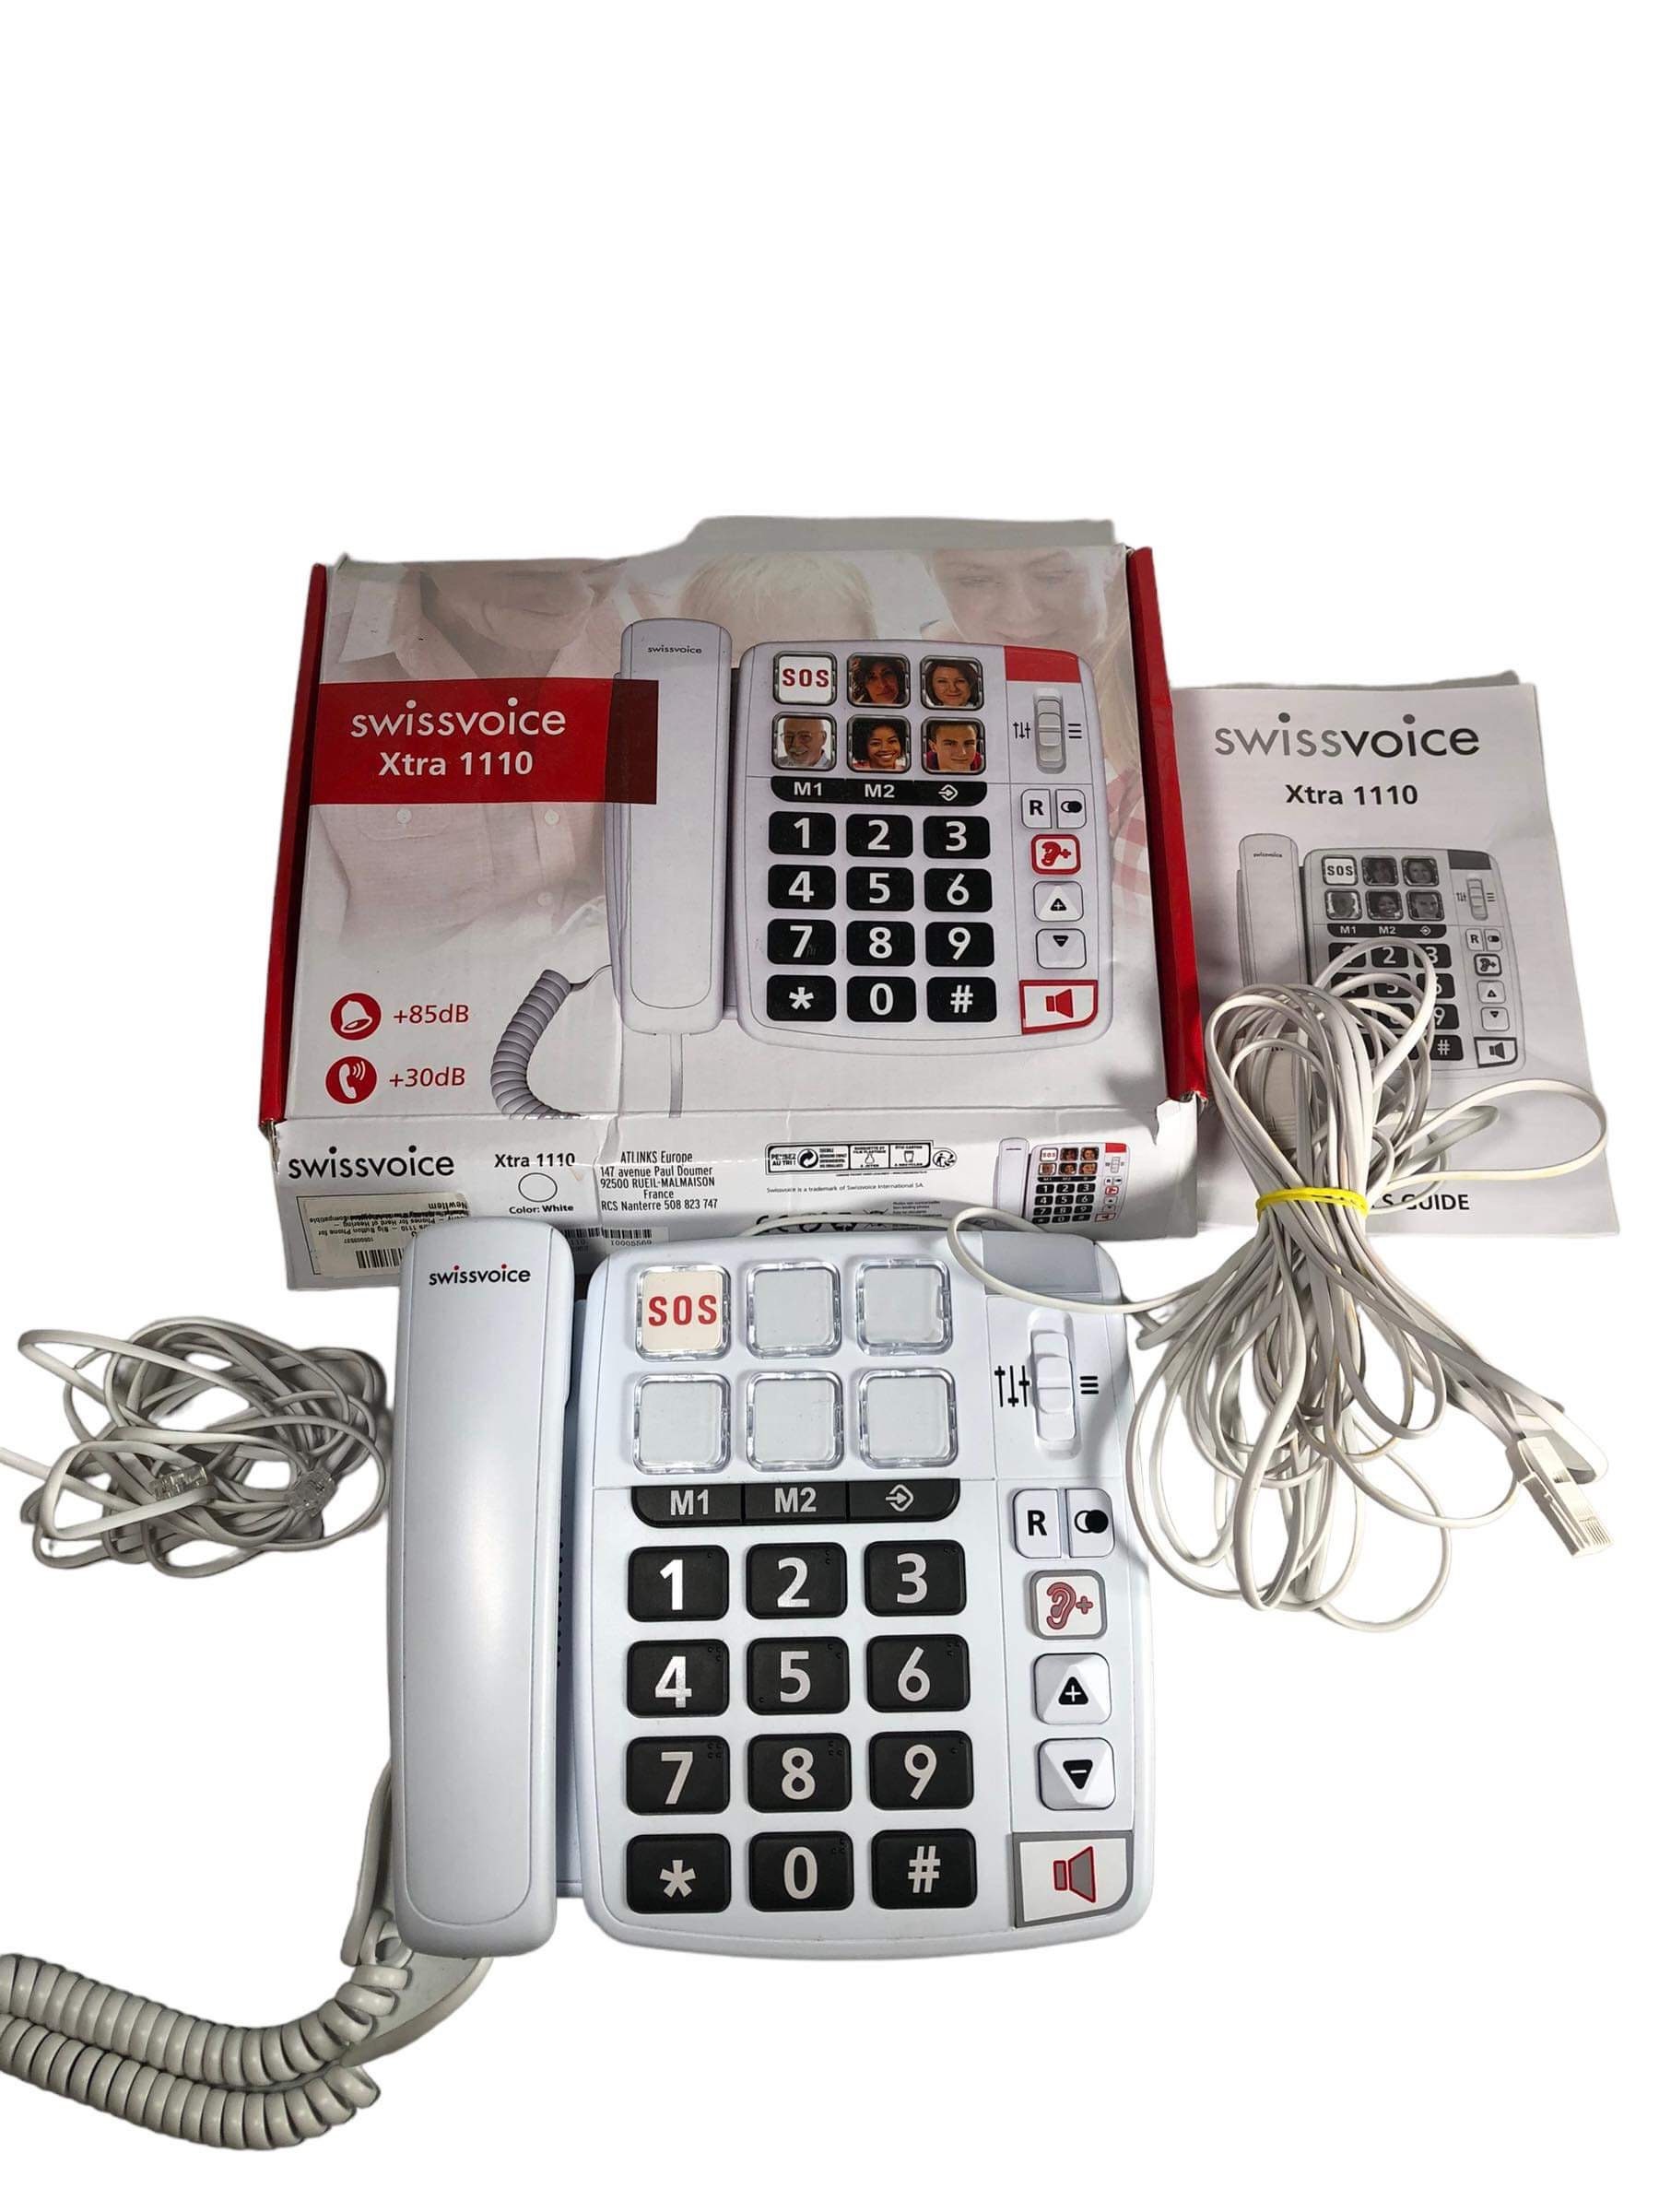 Swissvoice Xtra 1110 landline phone - Swissvoice - Phones